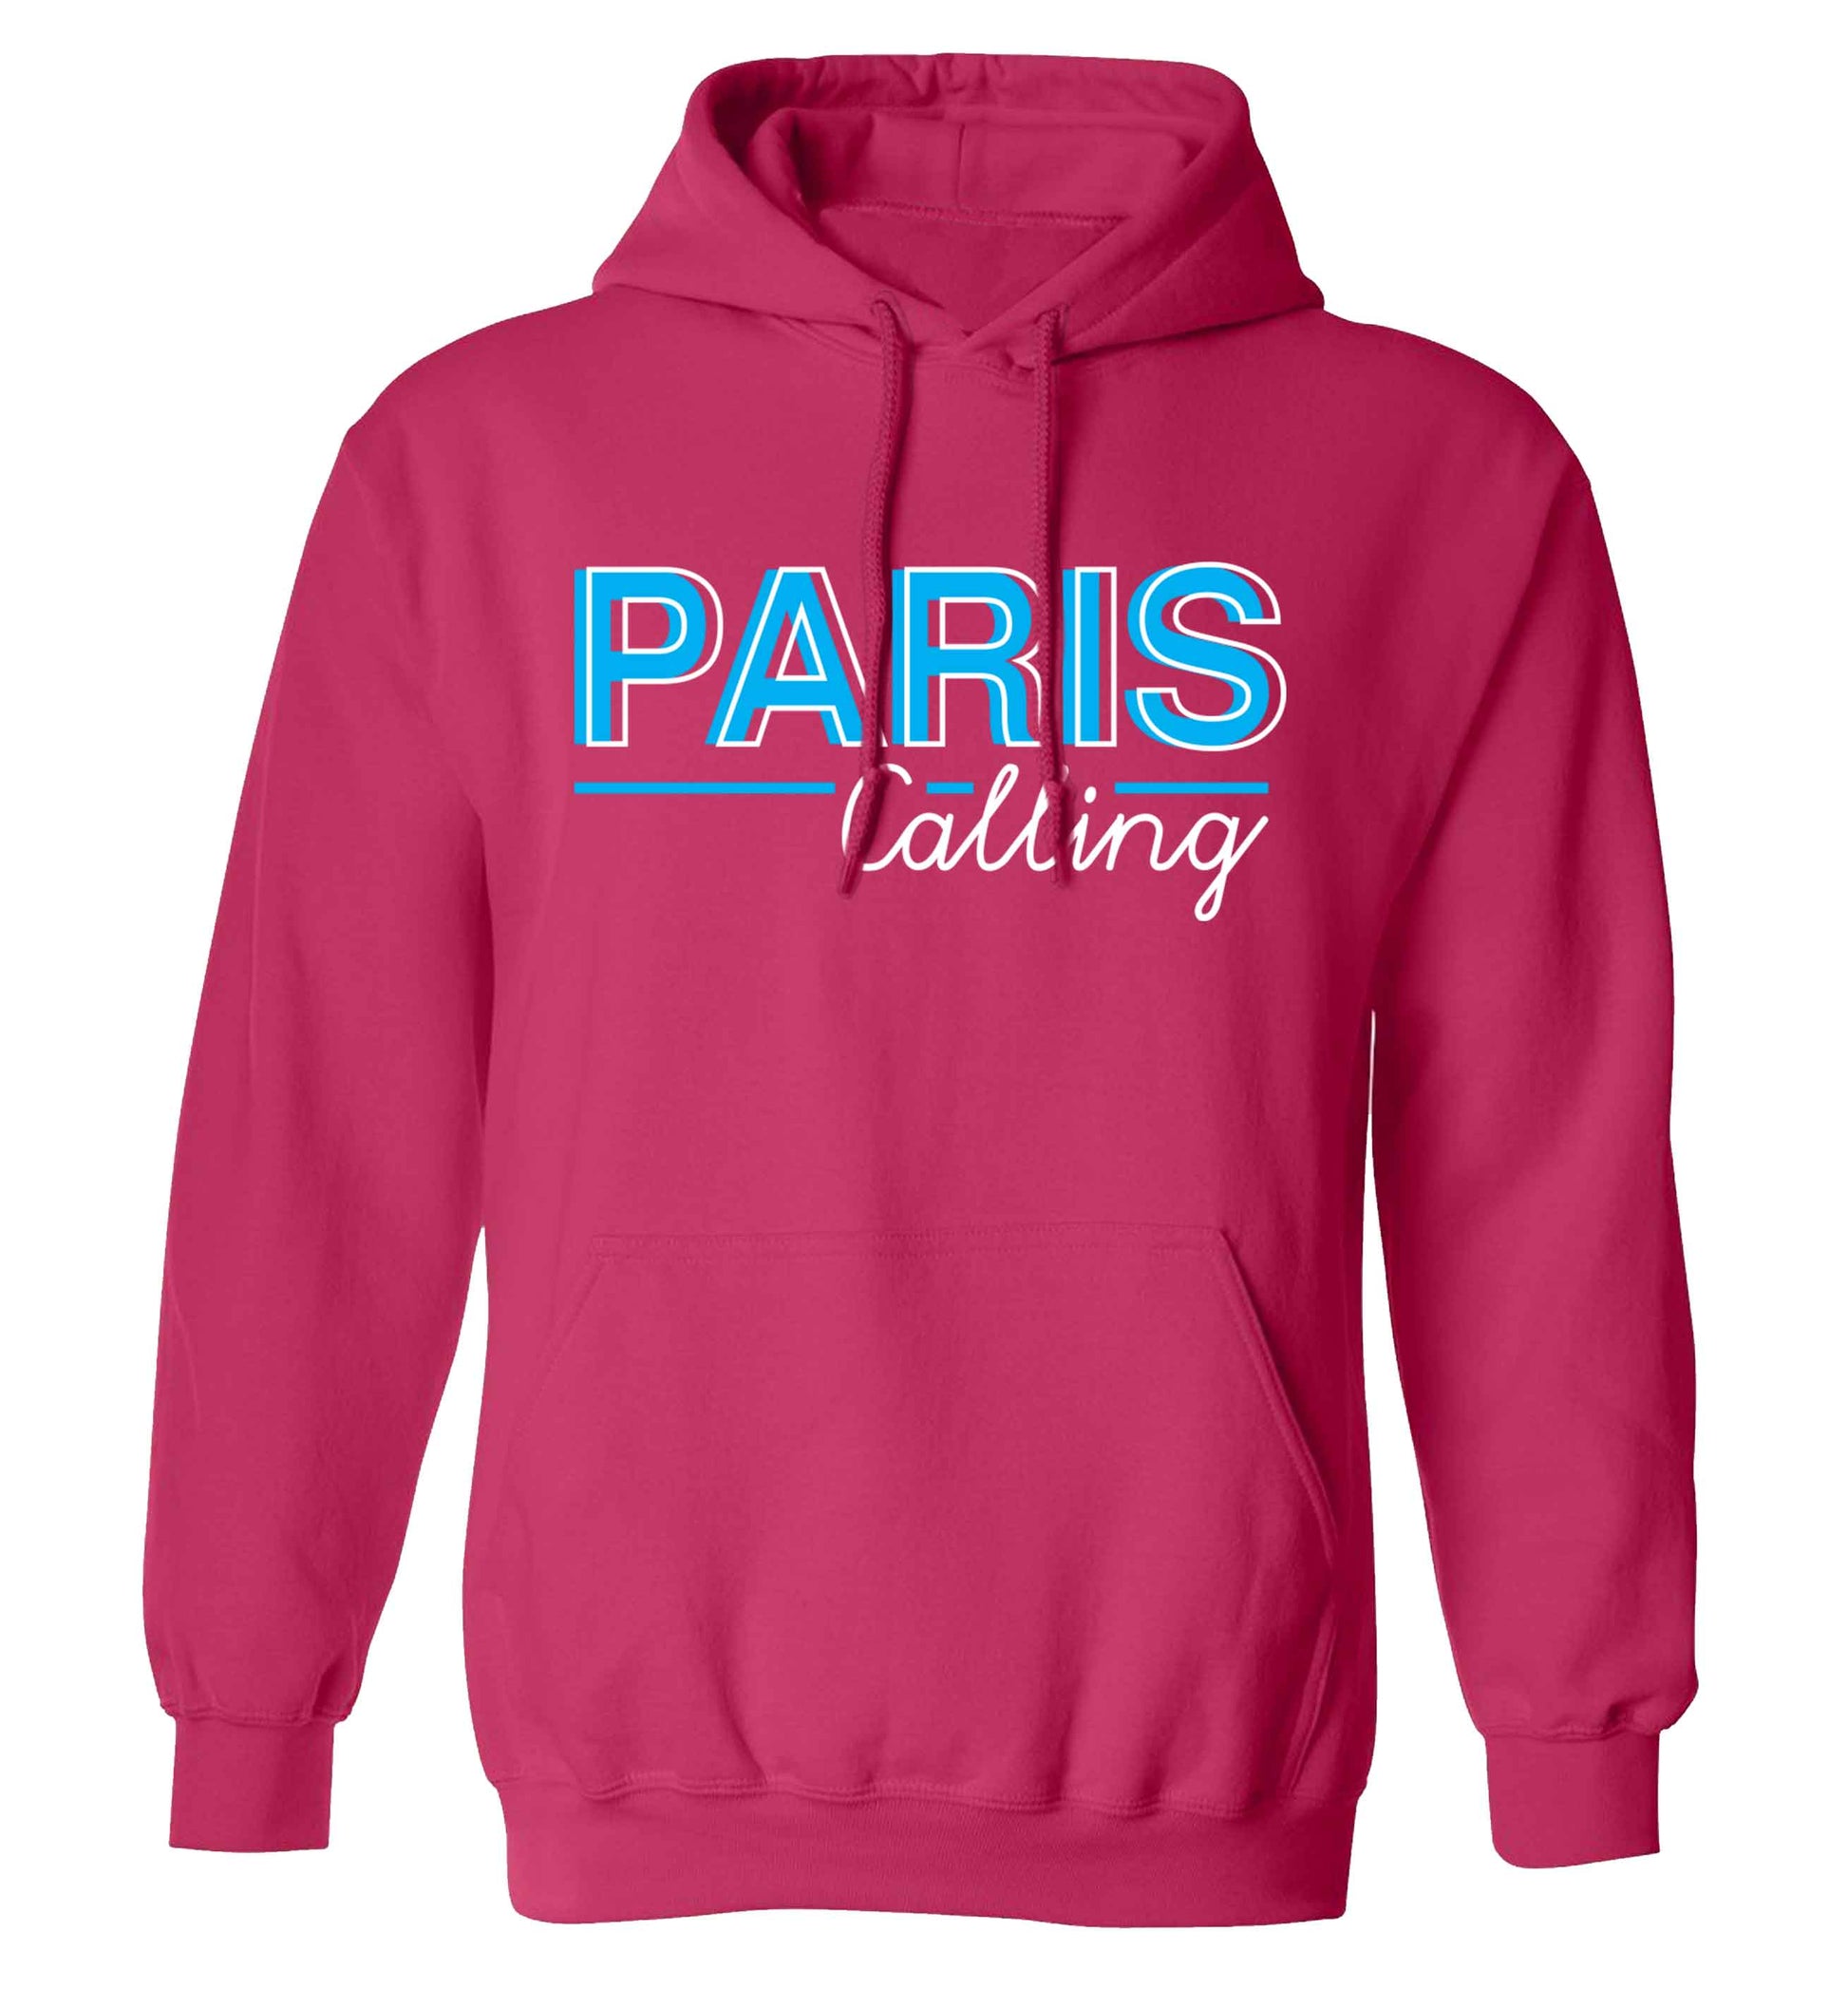 Paris calling adults unisex pink hoodie 2XL